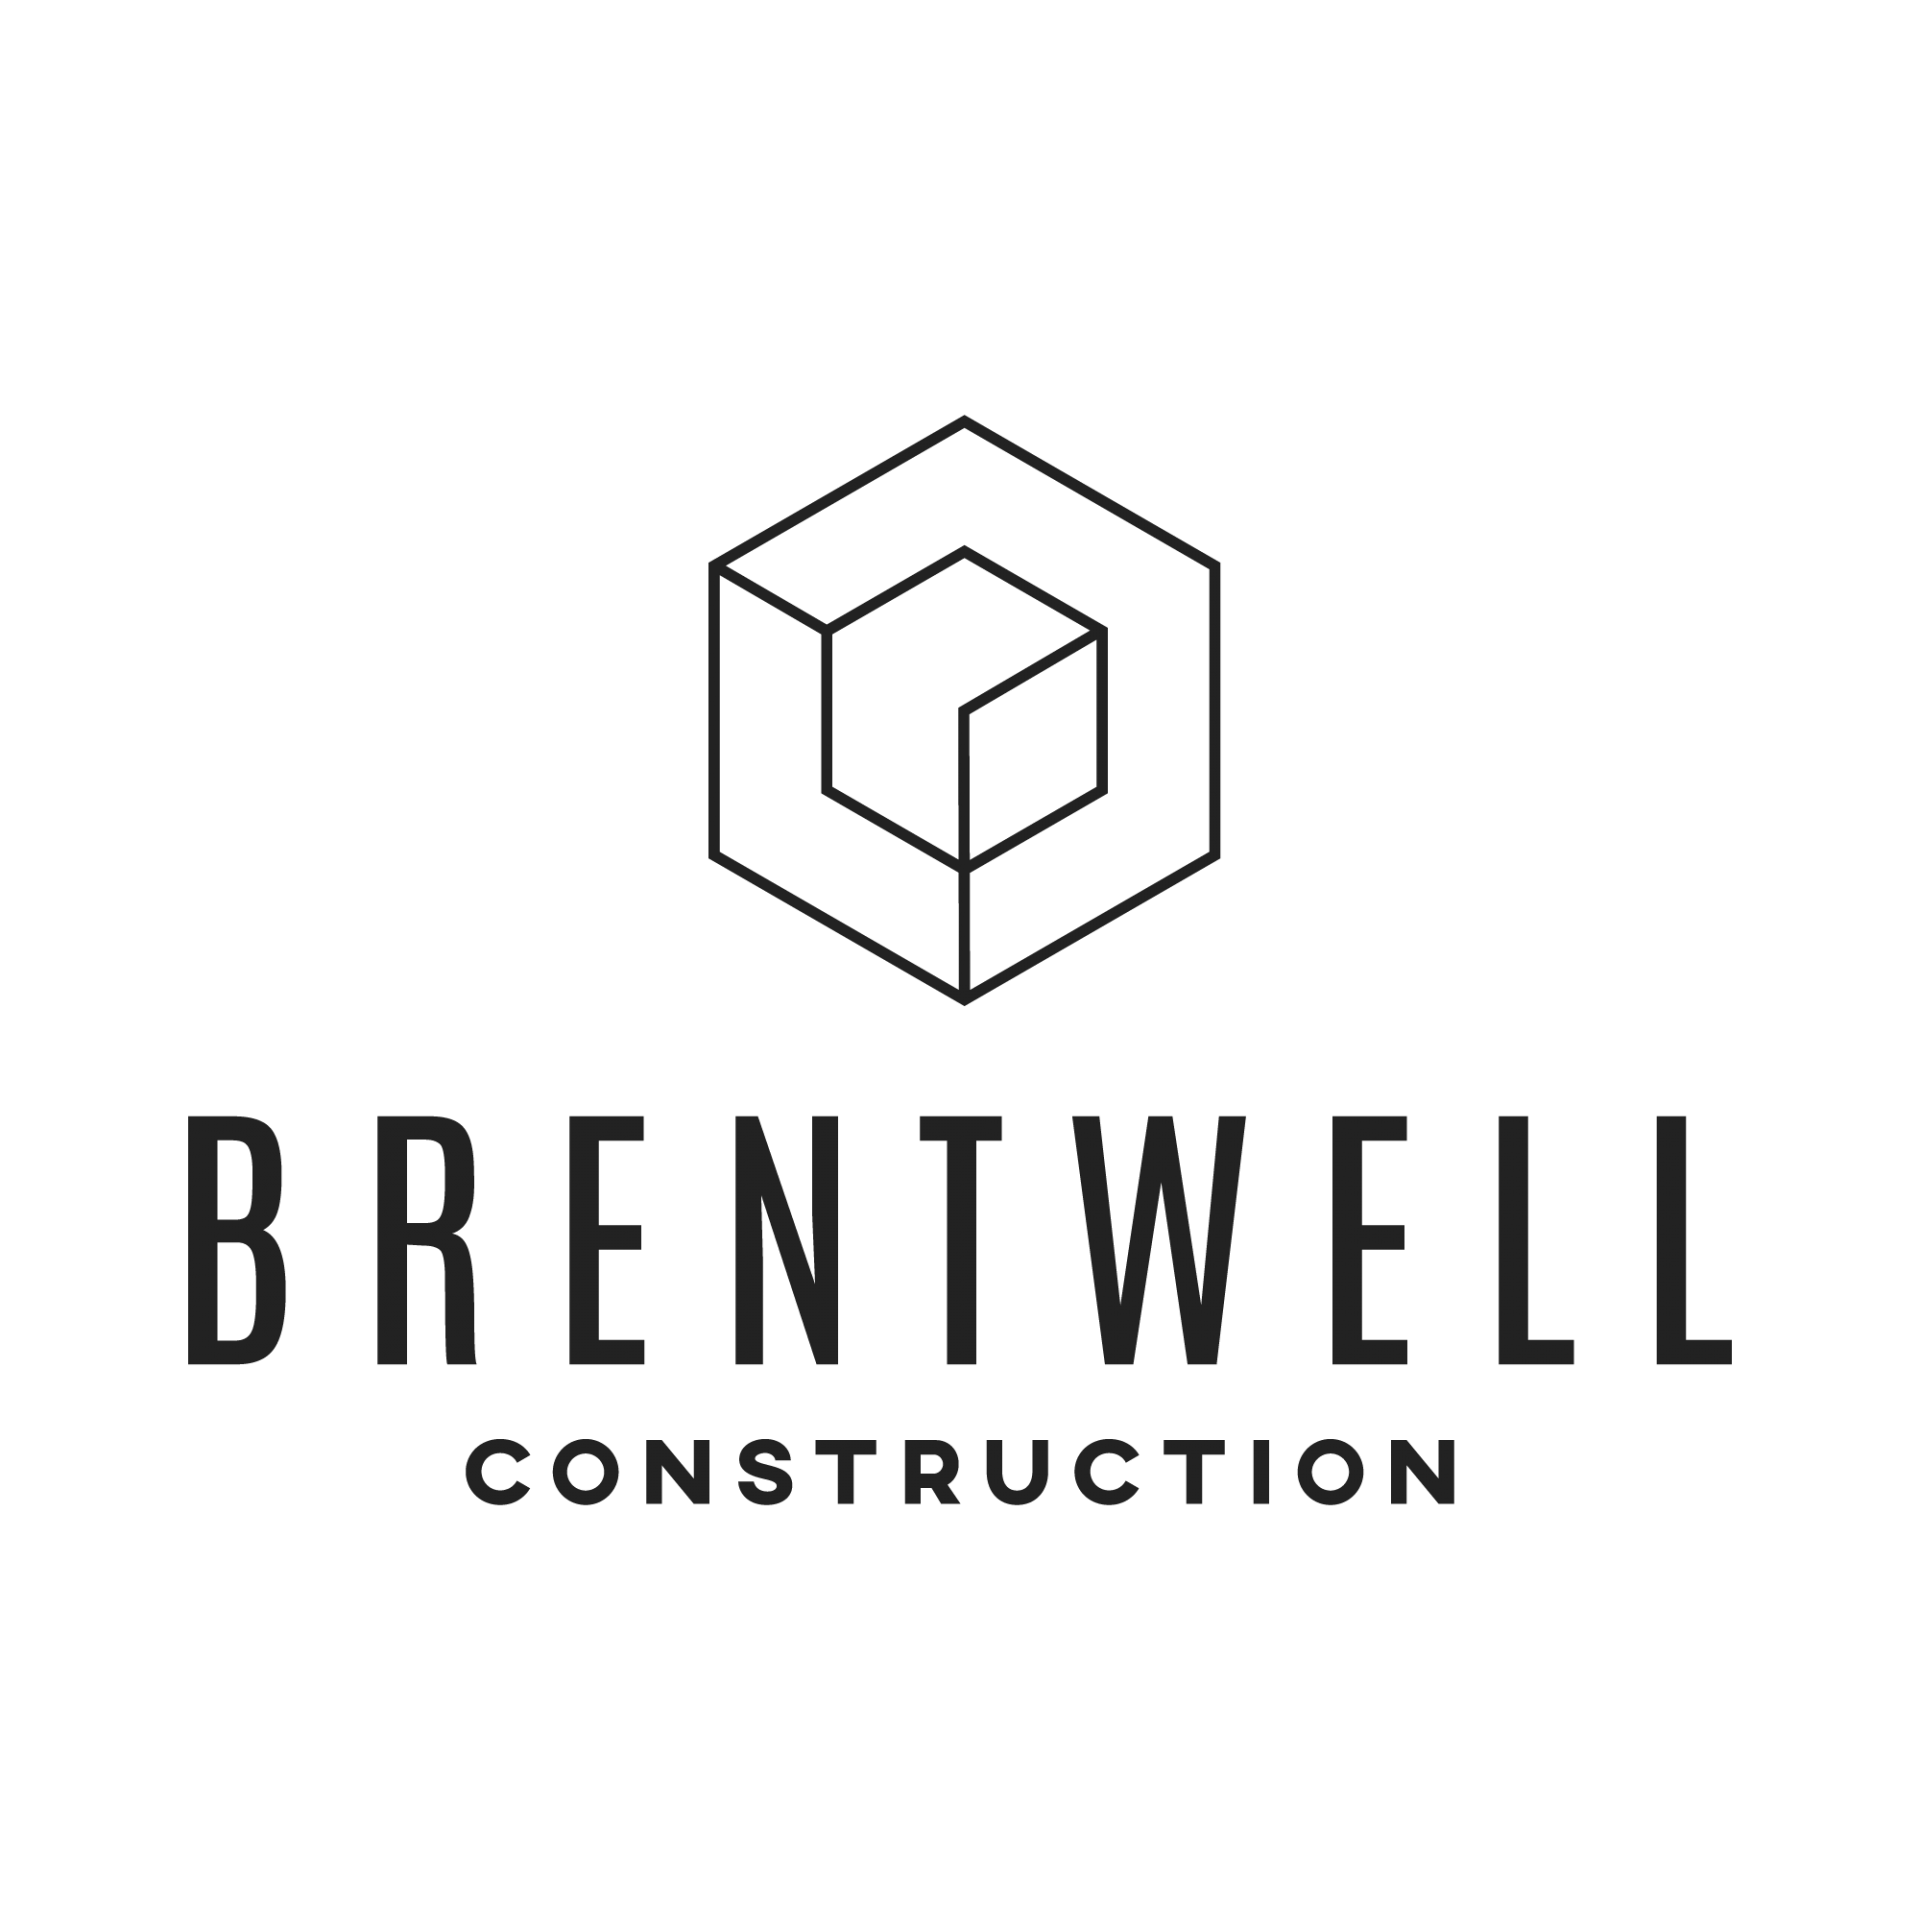 Brentwell Construction black logo